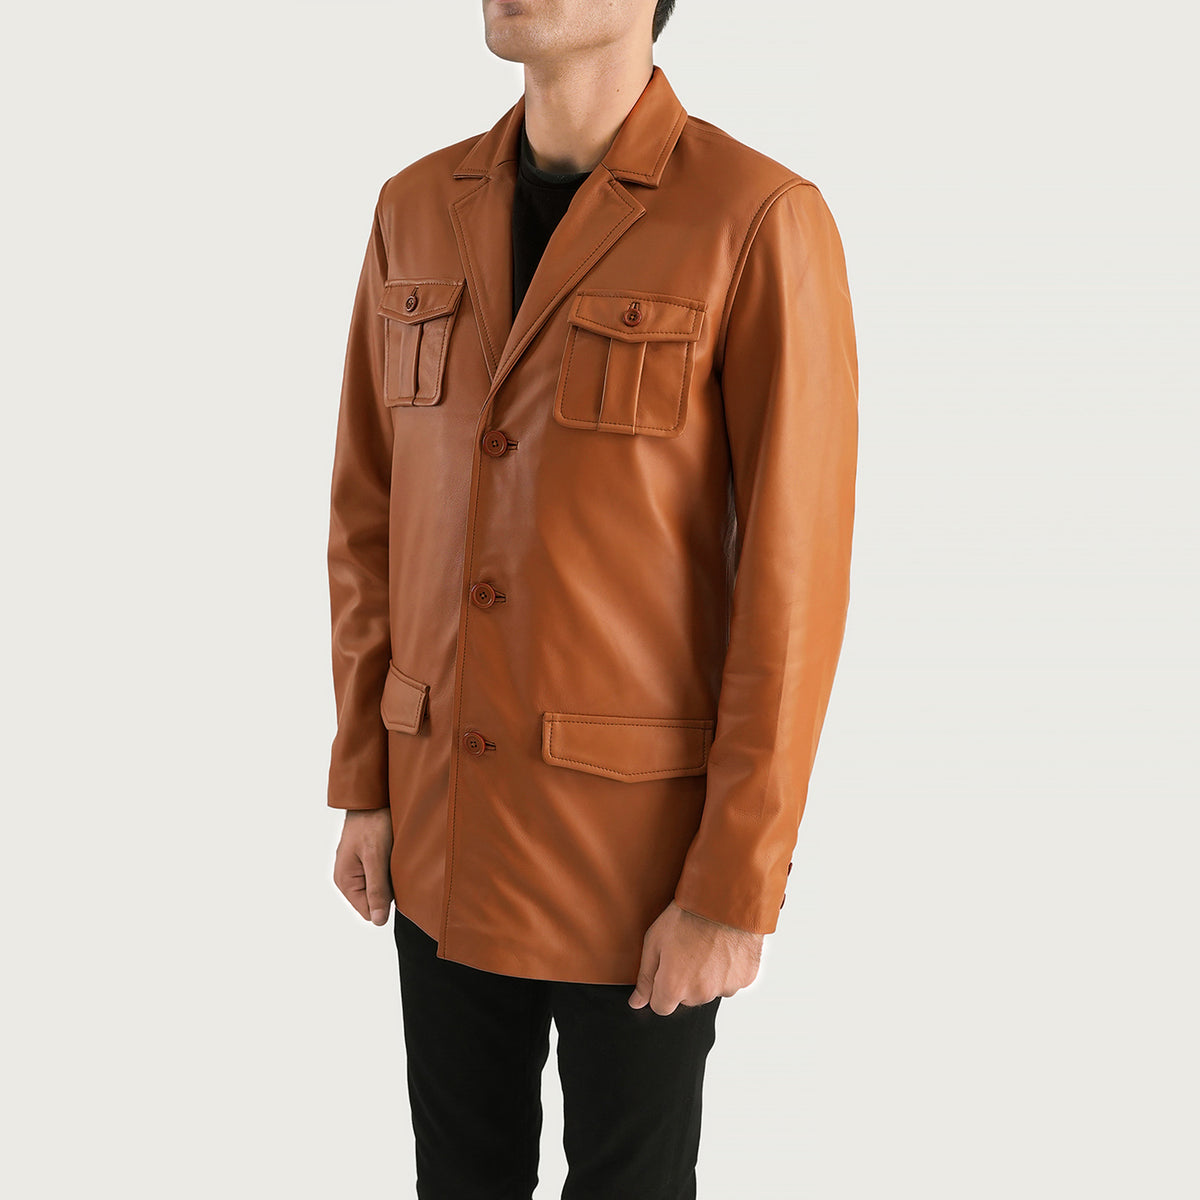 Ray Cutler Tan Brown Leather Blazer